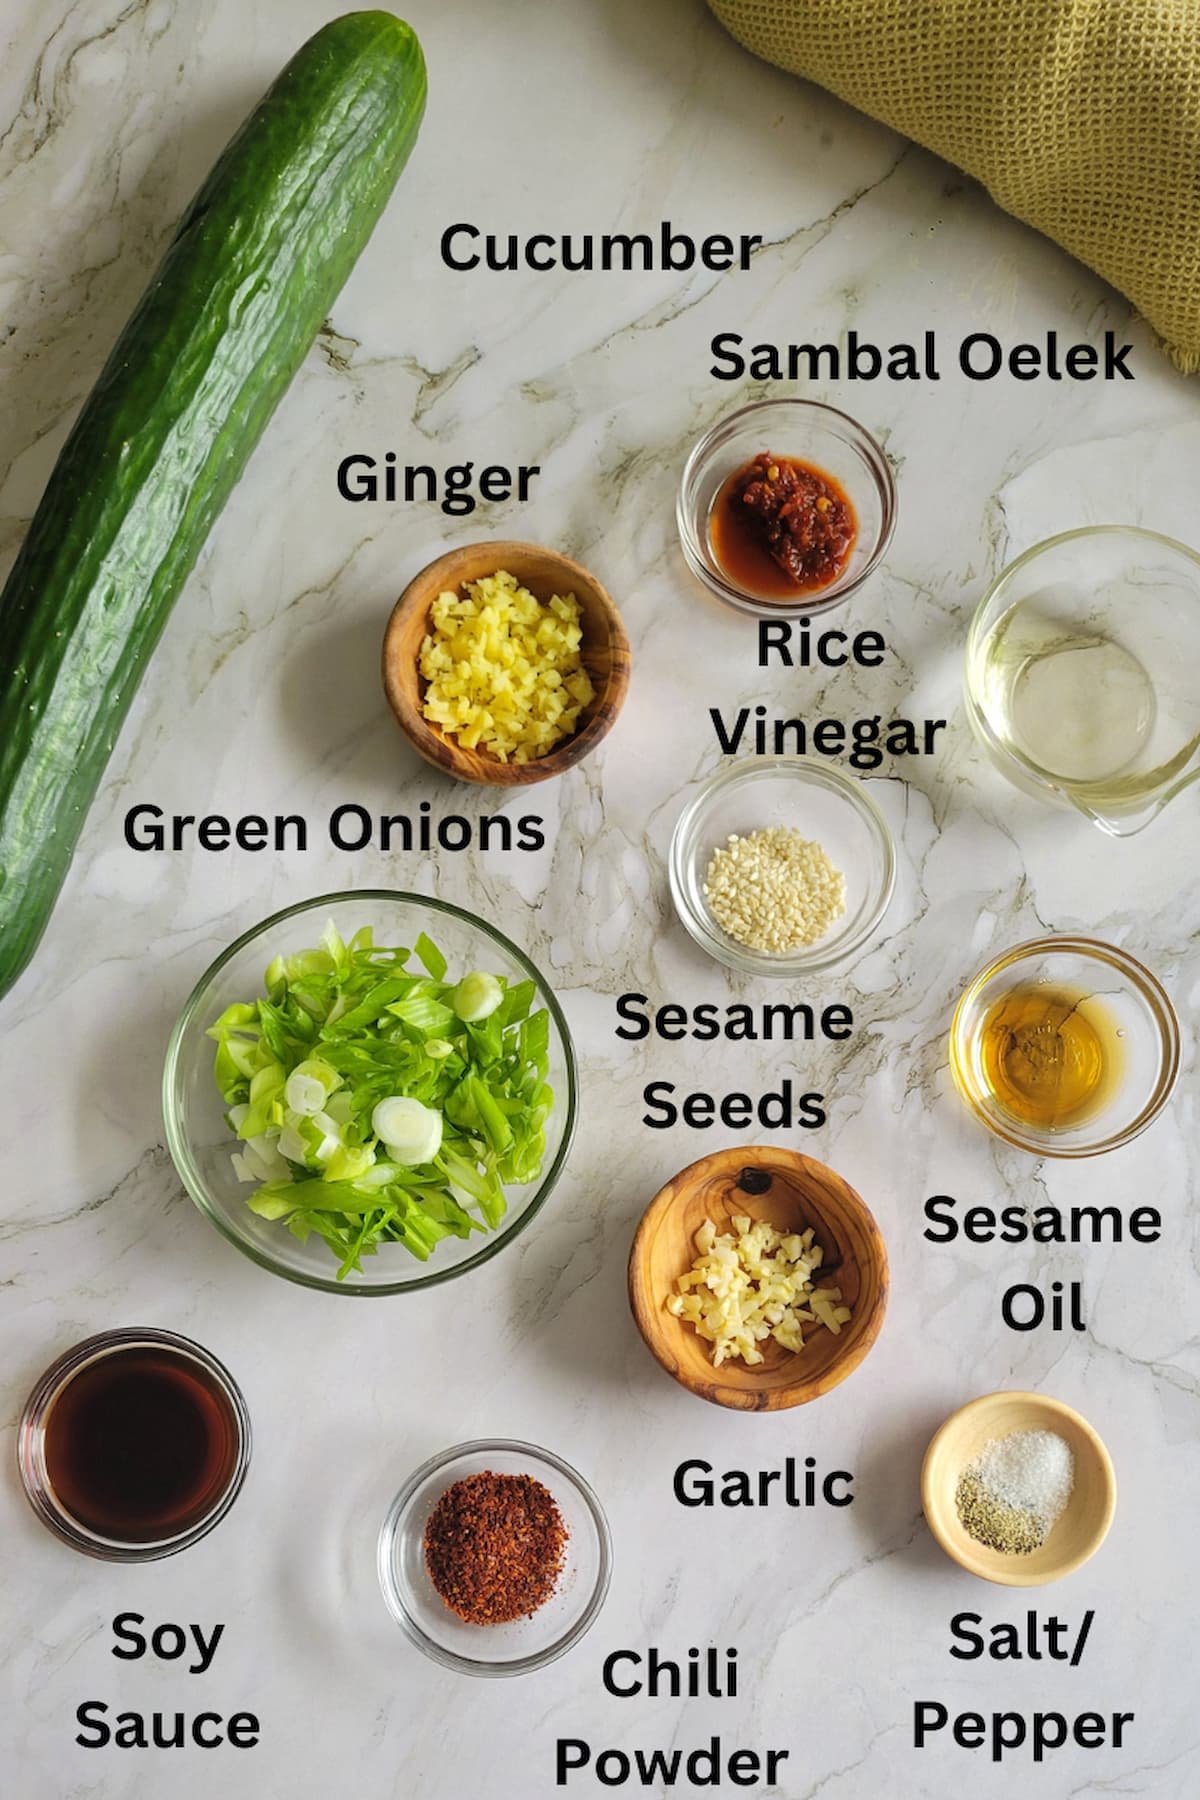 ingredients for asian cucumber salad - cucumber, garlic, ginger, sambal oelek, rice vinegar, sesame oil, sesame seeds, green onions, soy sauce, chili powder, salt/pepper